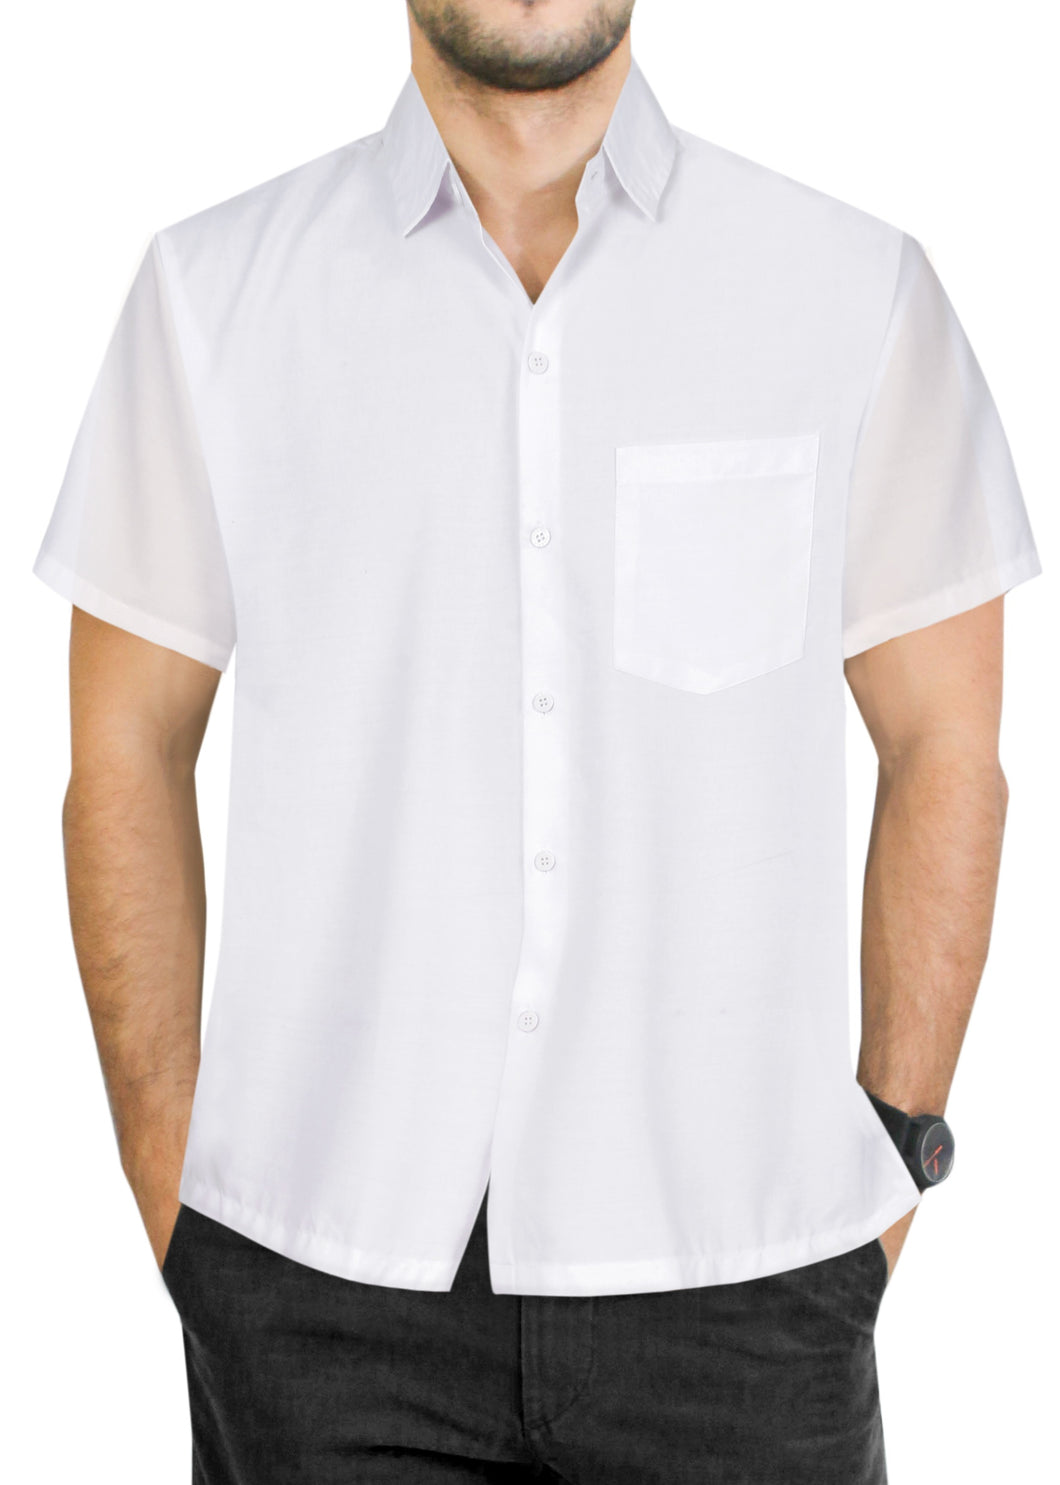 LA LEELA Men's Beach Hawaiian casual Aloha Button Down Short Sleeve shirt White_W882